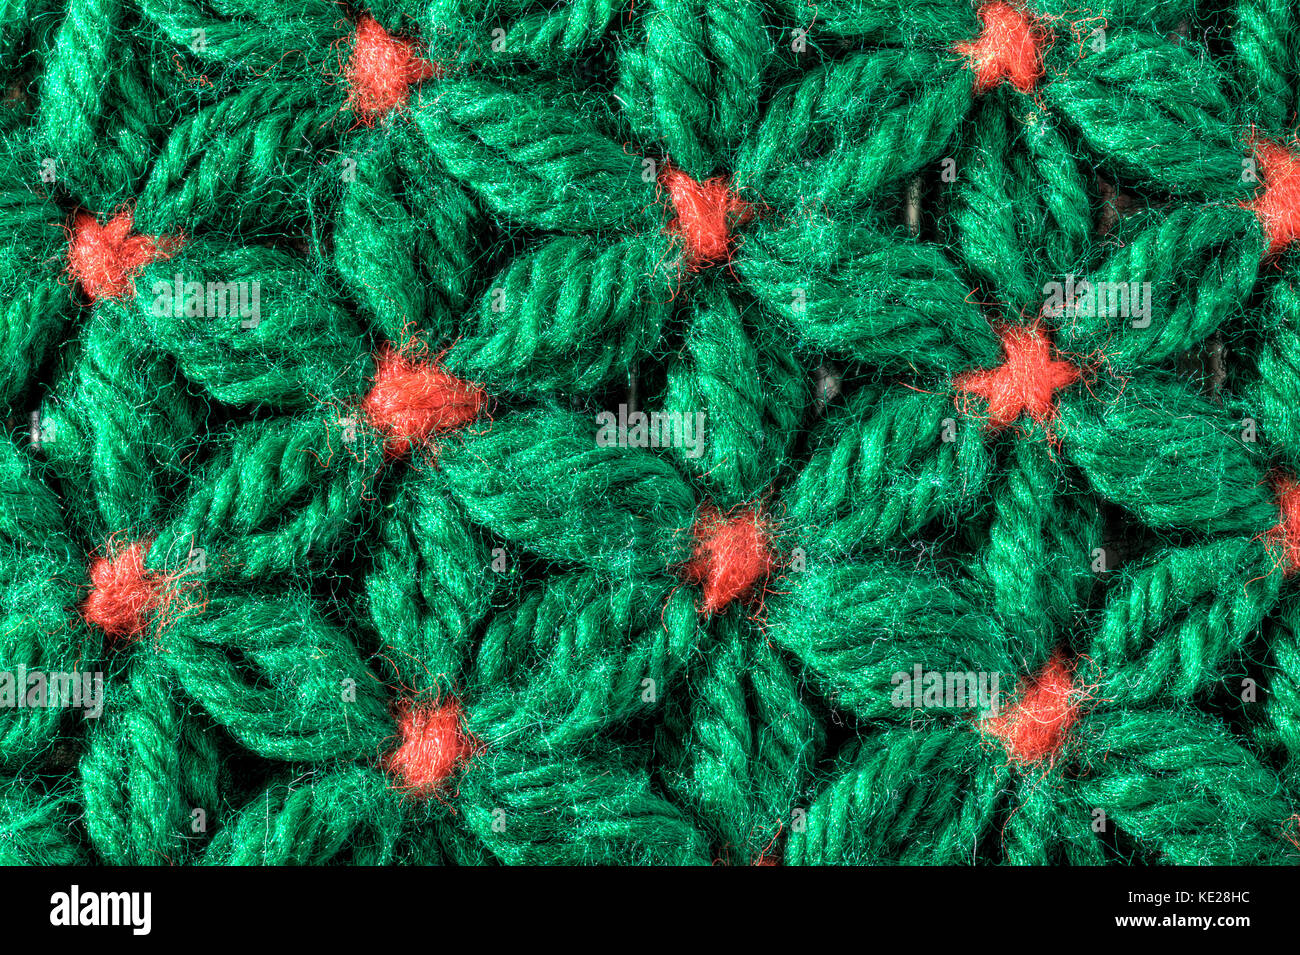 Fancy Yarn Crochet Light Brown Coral Fleece Yarn Knitting Yarn Fluffy Fuzzy  Blanket Sweater DIY Yarn